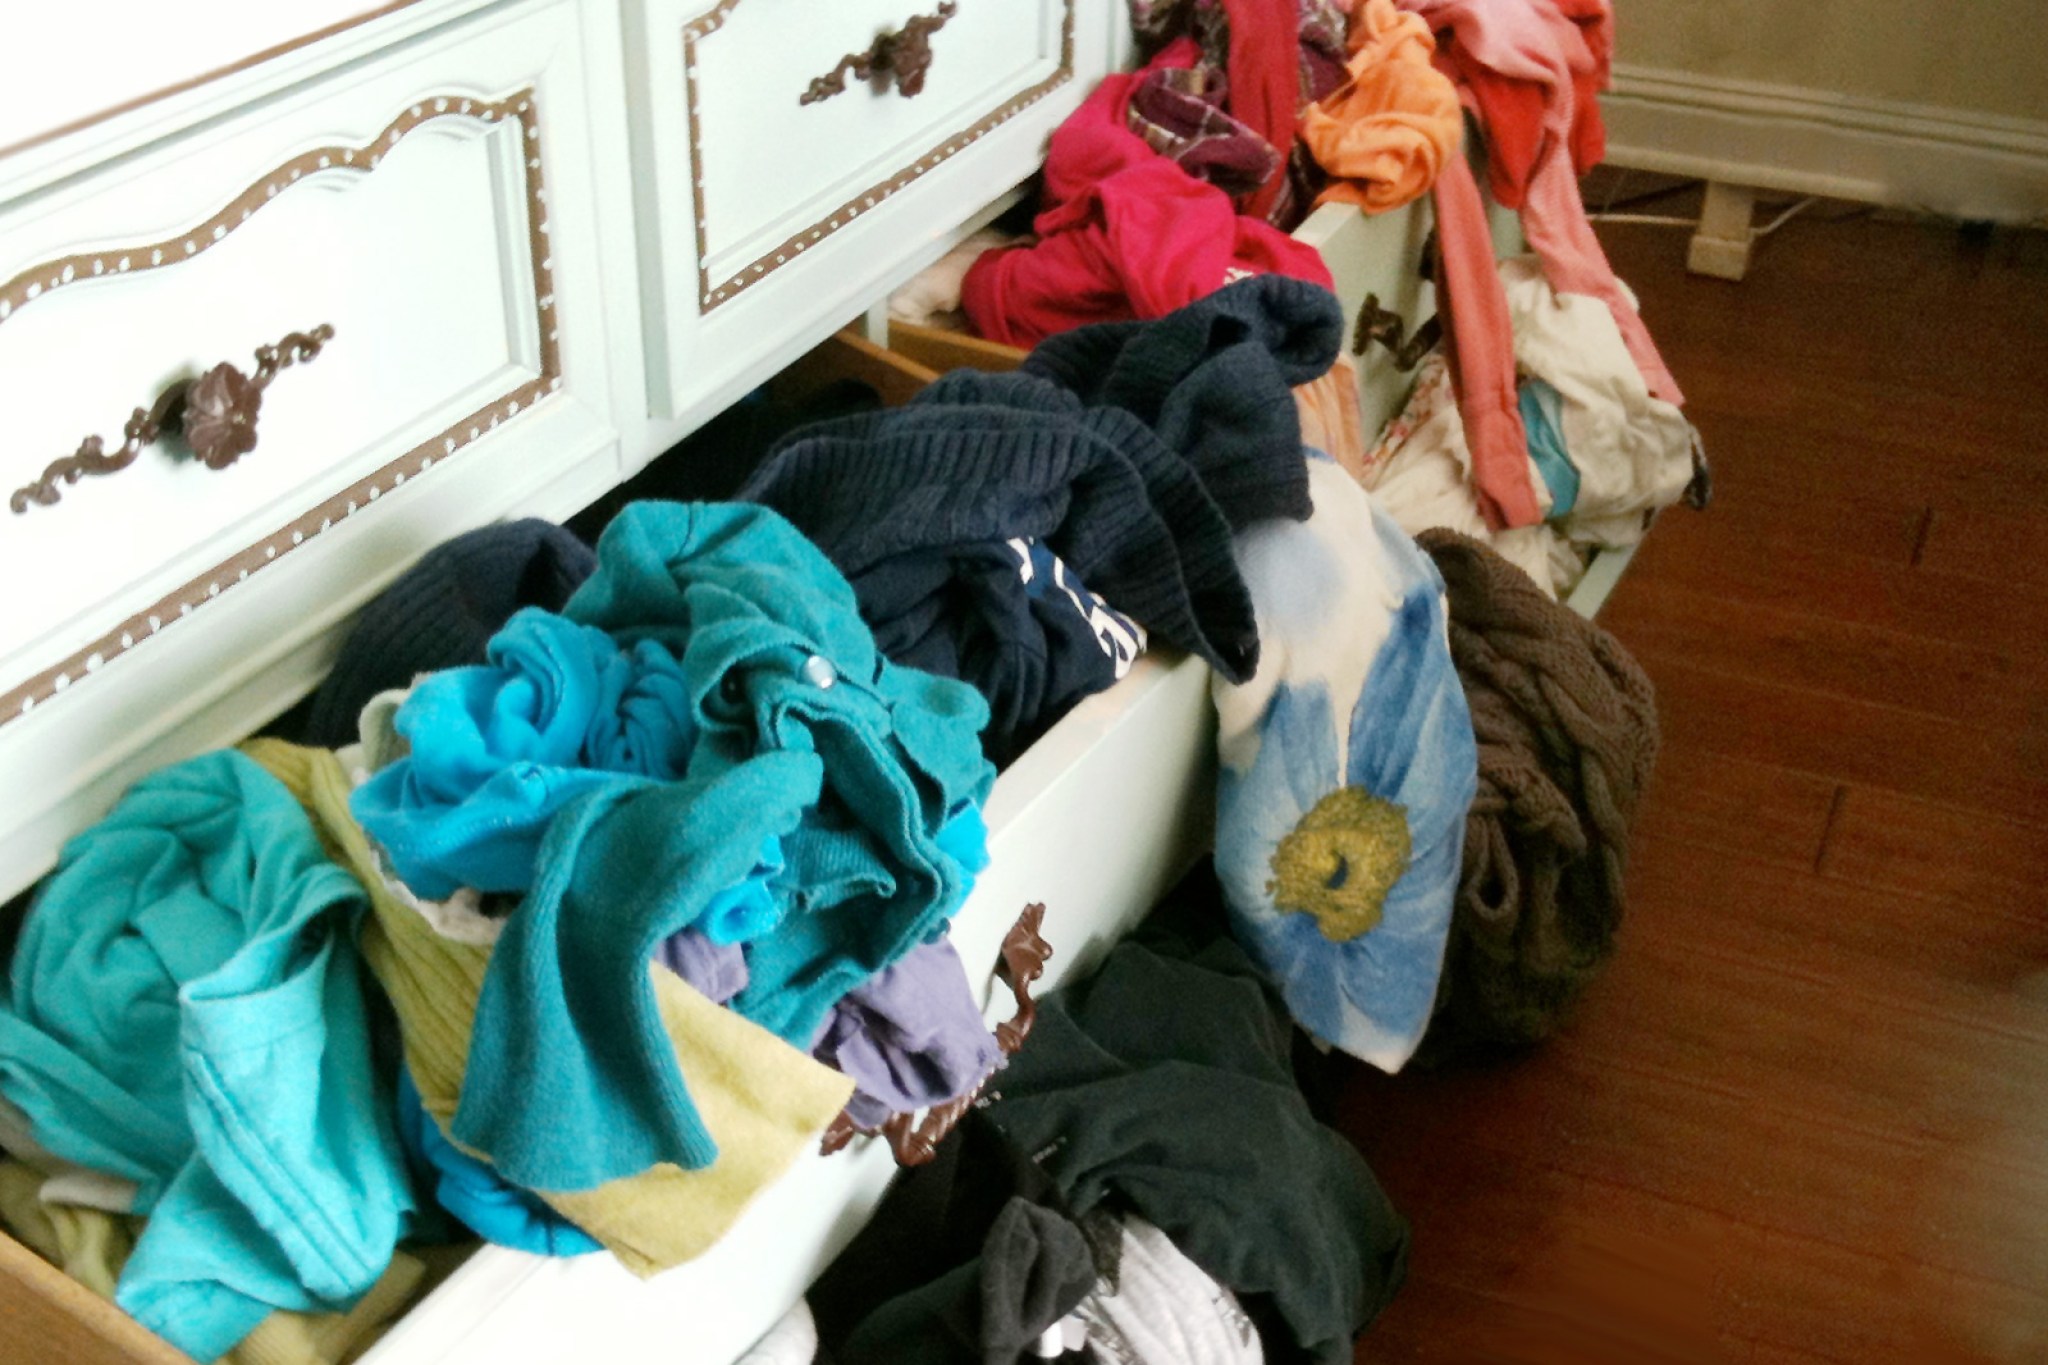 16 Genius Ways to Organize Your Messy Dresser Drawers